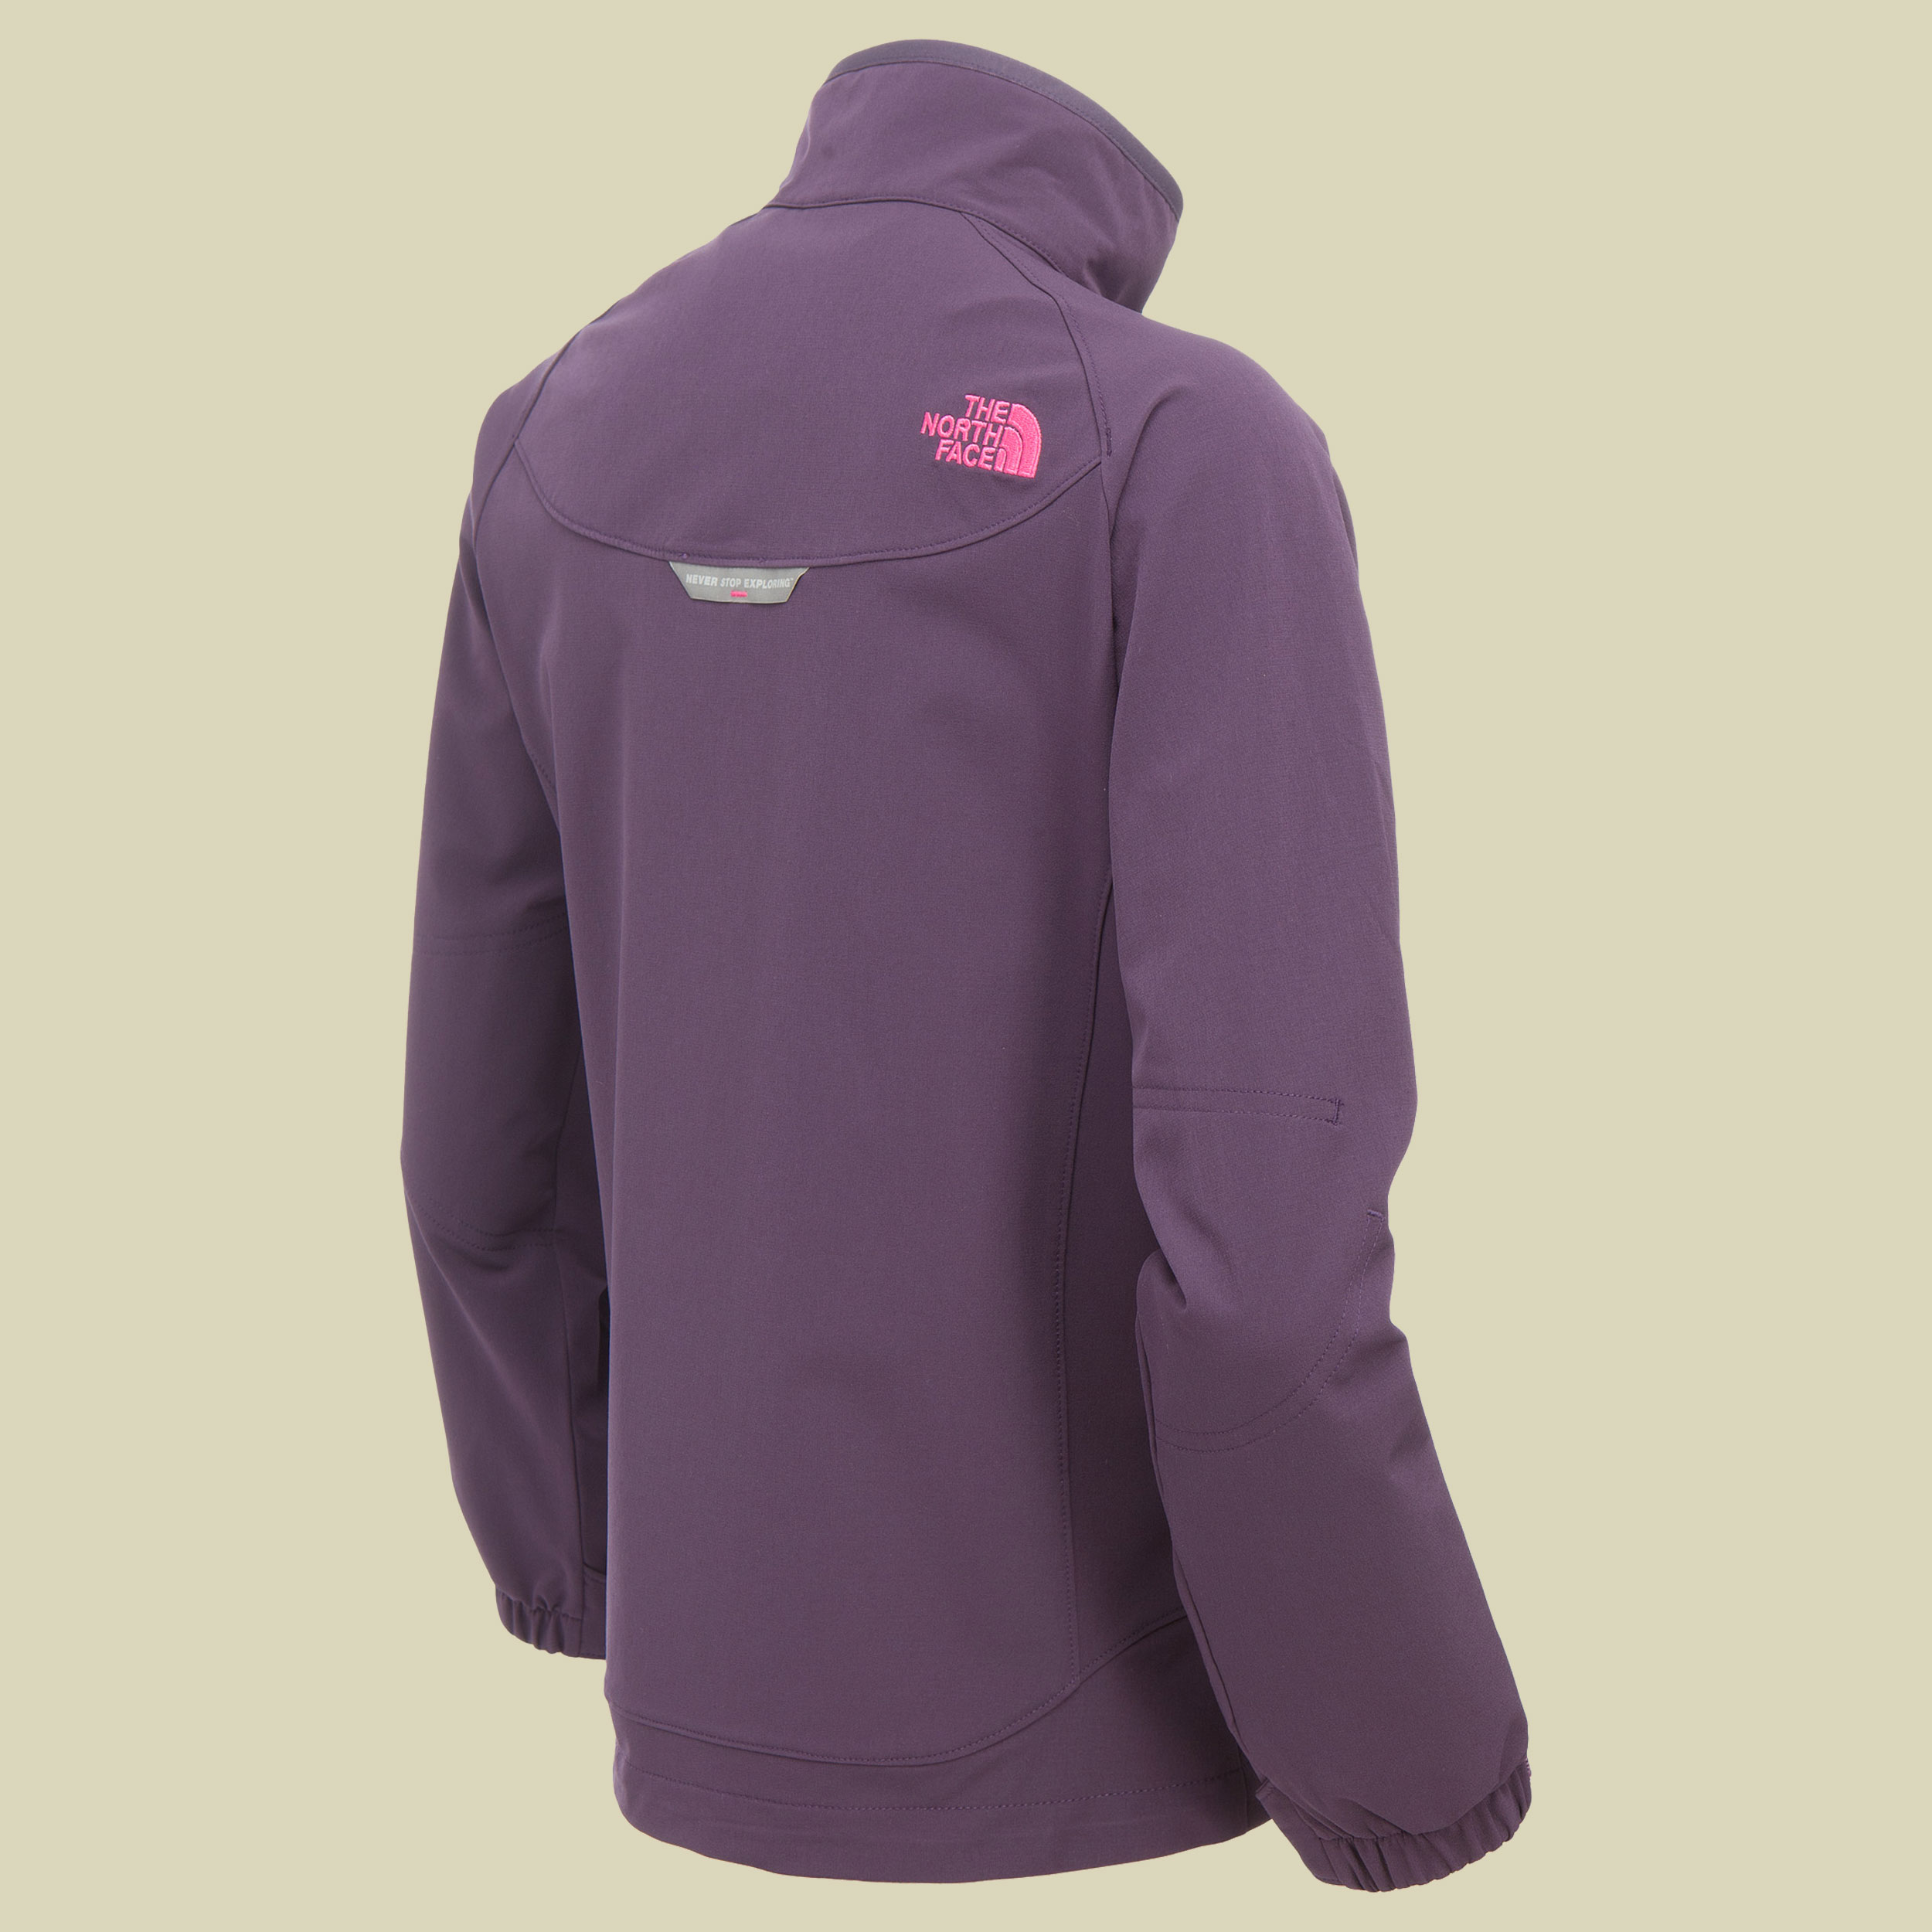 Girl's Ceresio Jacket Größe S Farbe grand purple